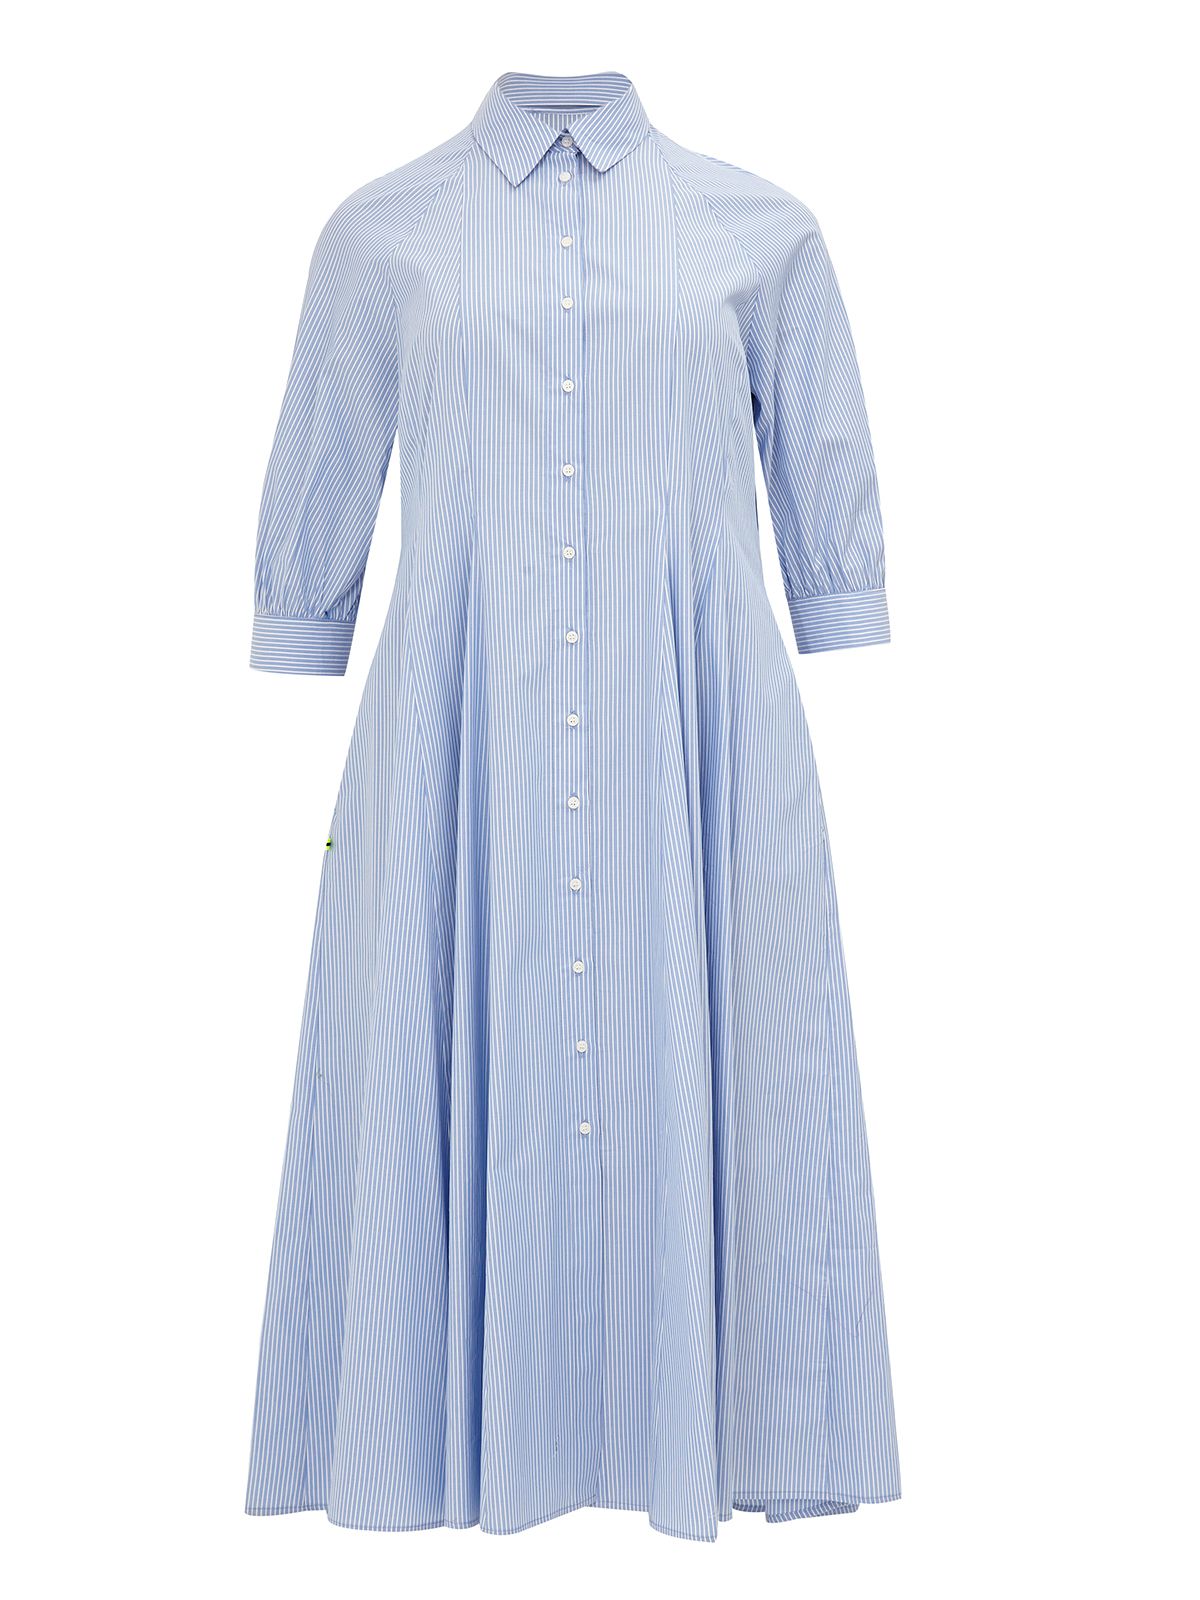 Kleid gestreift hellblau - Matfashion